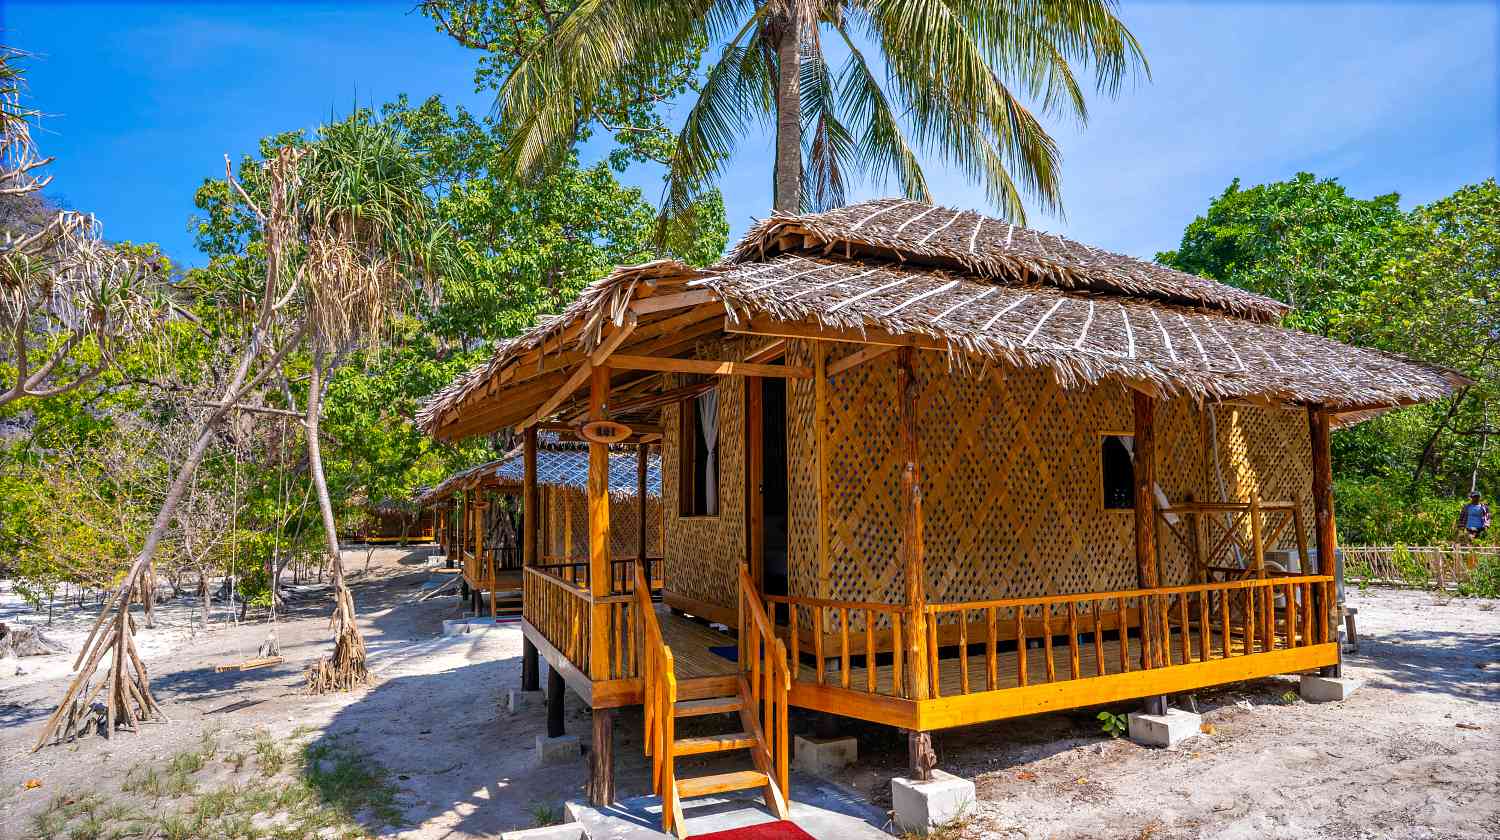 Bamboo bungalow on the island | Home Defense Guns | Shotgun vs. Handgun | Featured